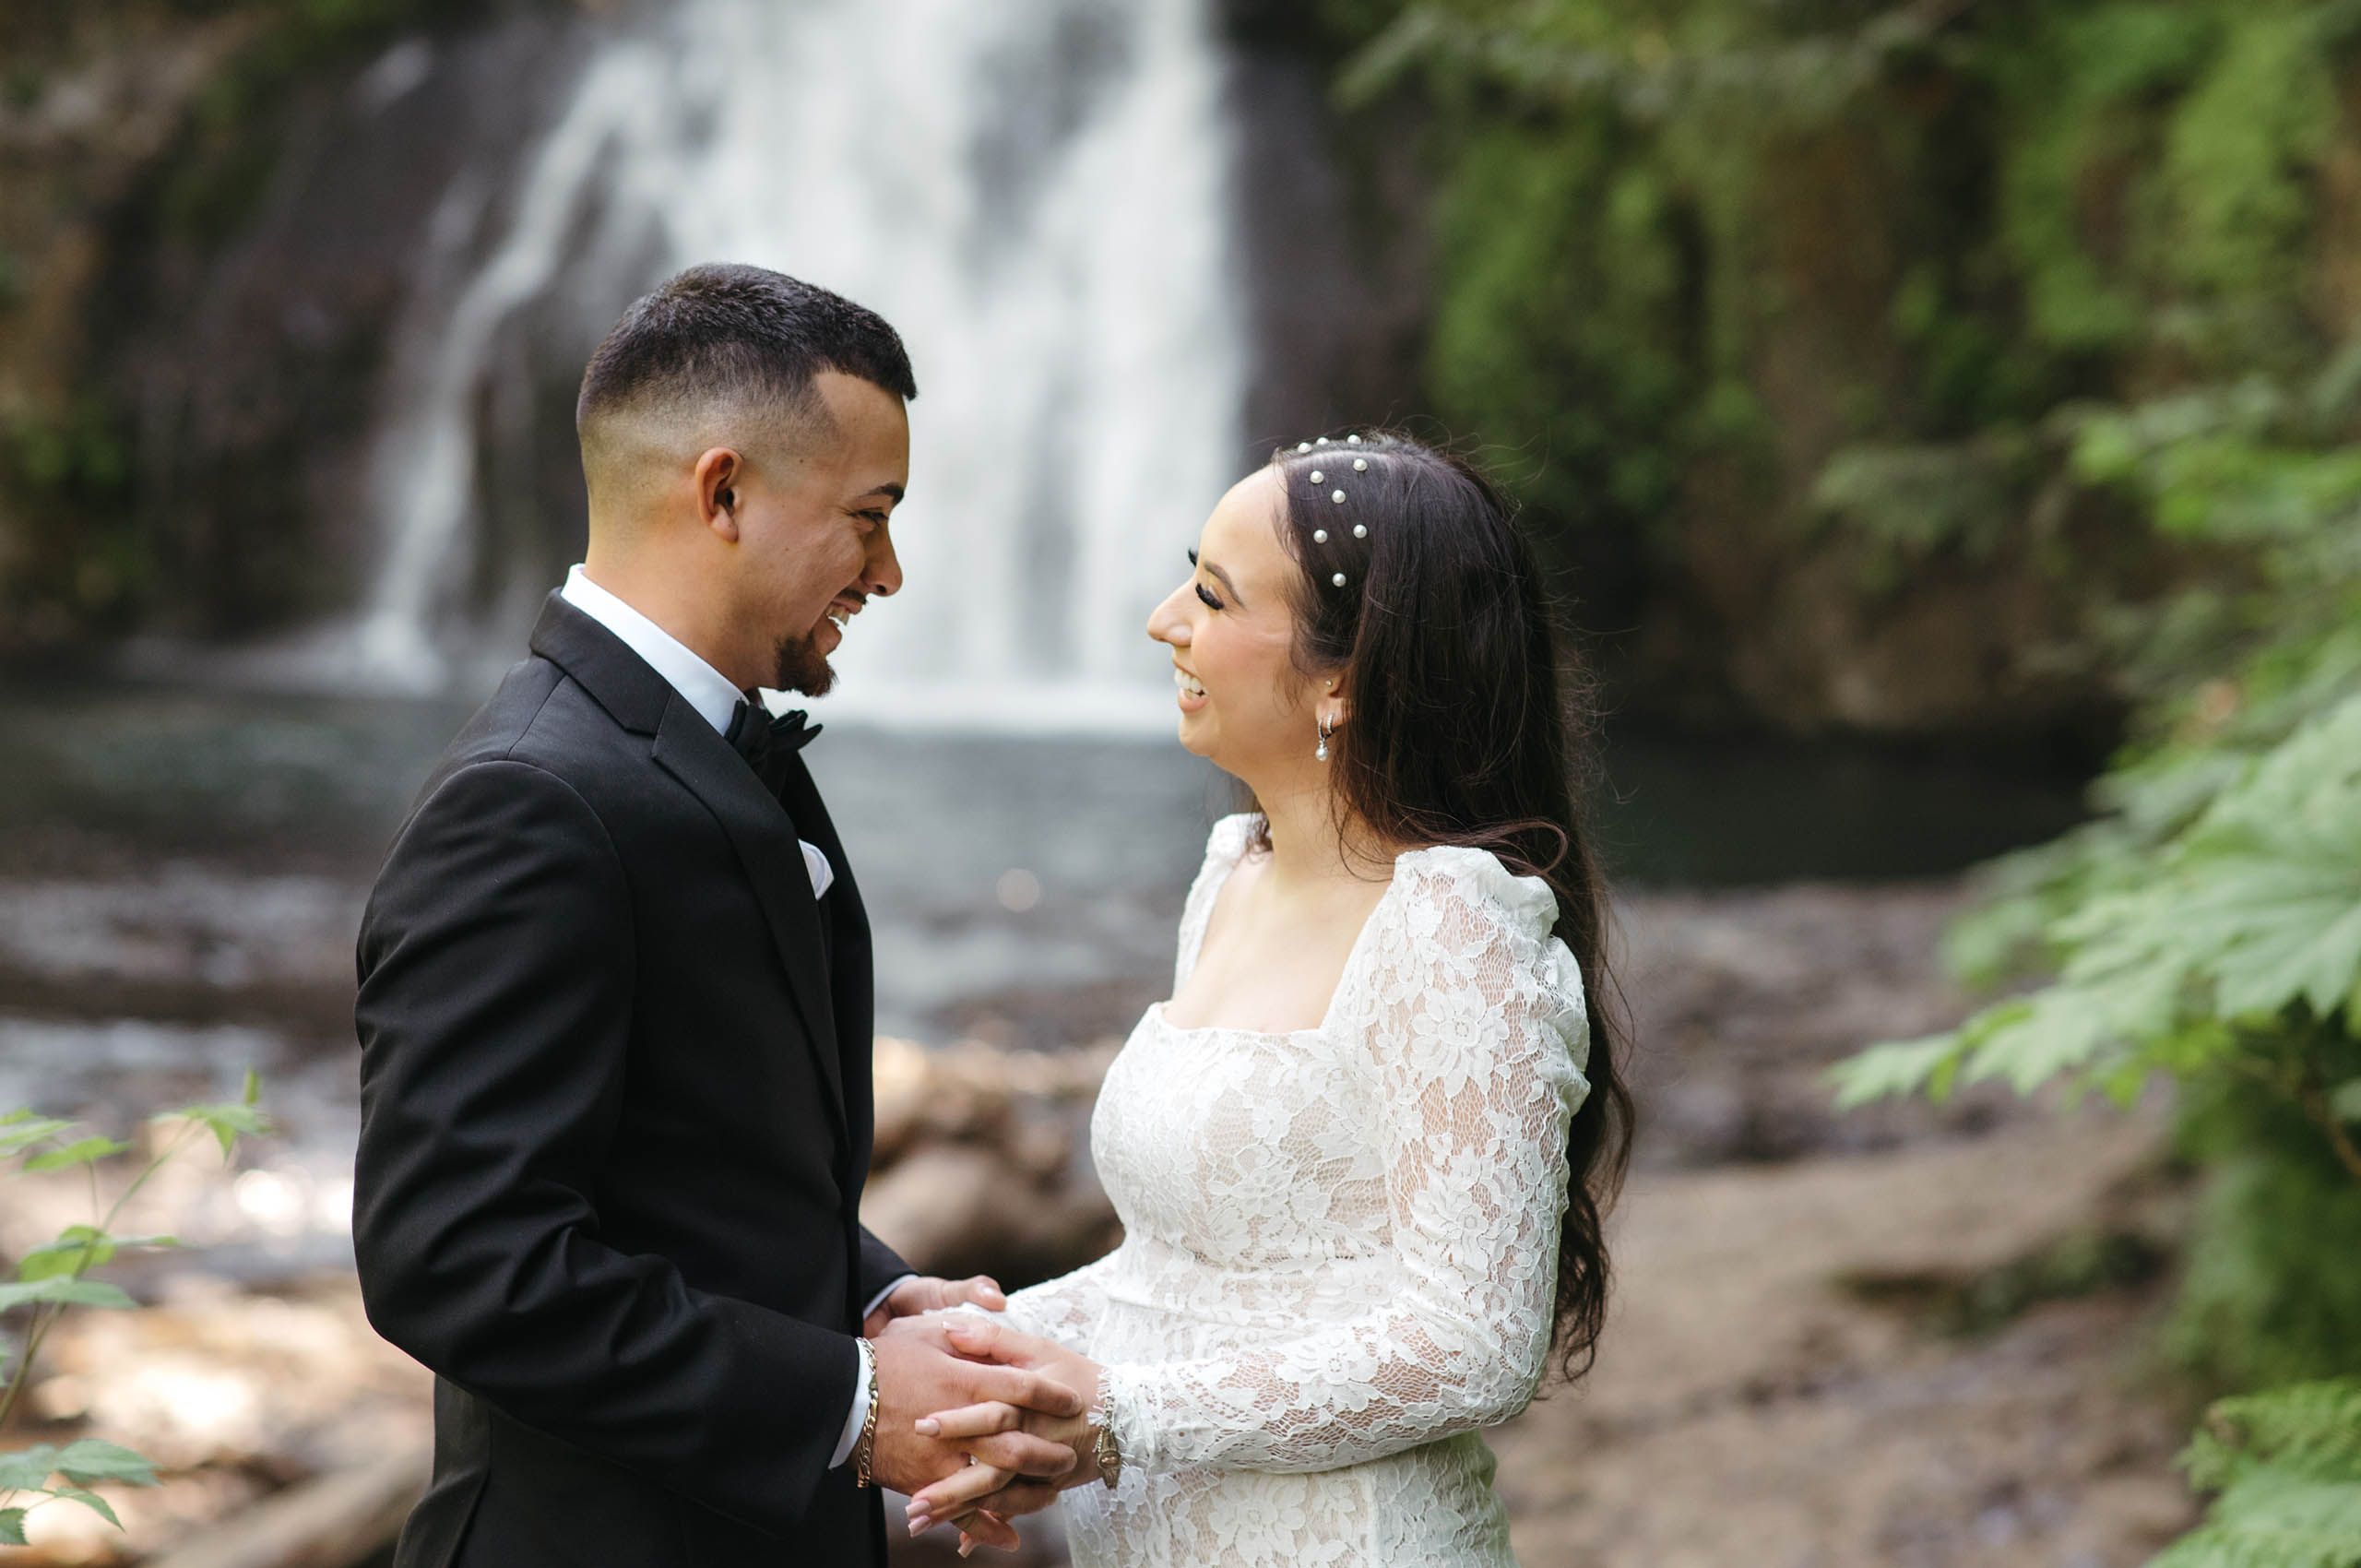 Oregon waterfall elopement